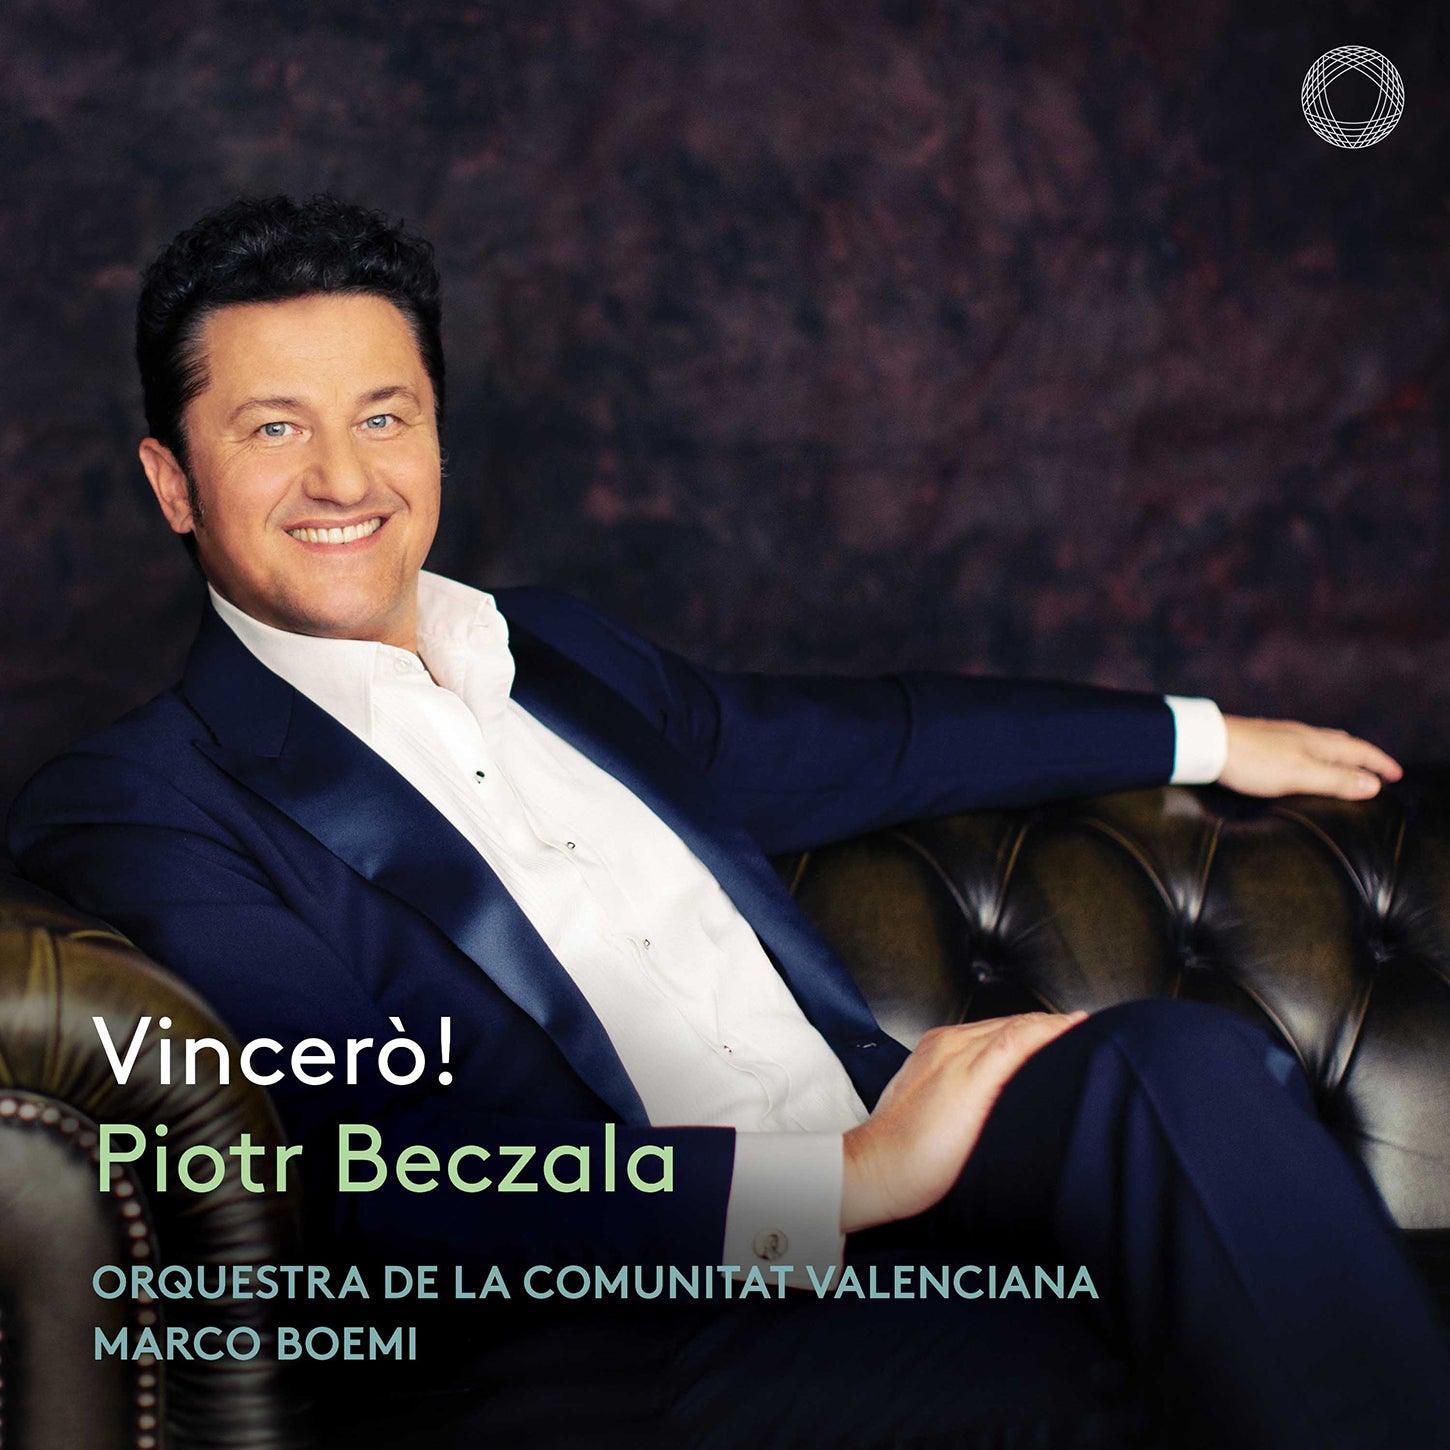 Vincero! / Beczala, Boemi, Choir and Orchestra of the Community of Valencia - ArkivMusic